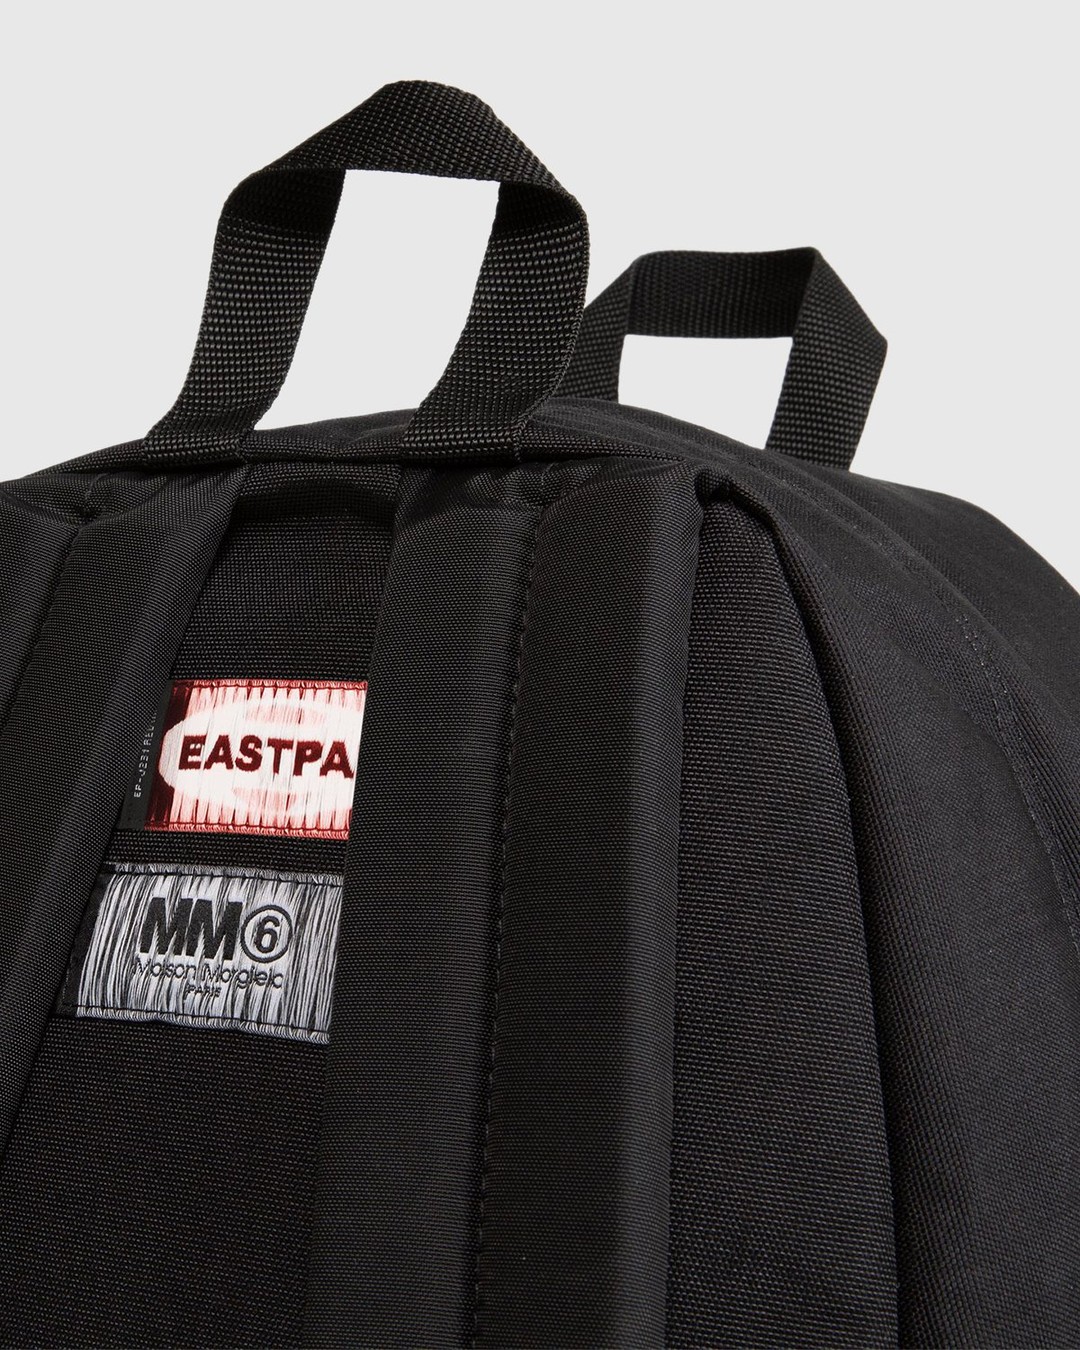 MM6 Maison Margiela x Eastpak – Padded XL Backpack Black - Backpacks - Black - Image 4